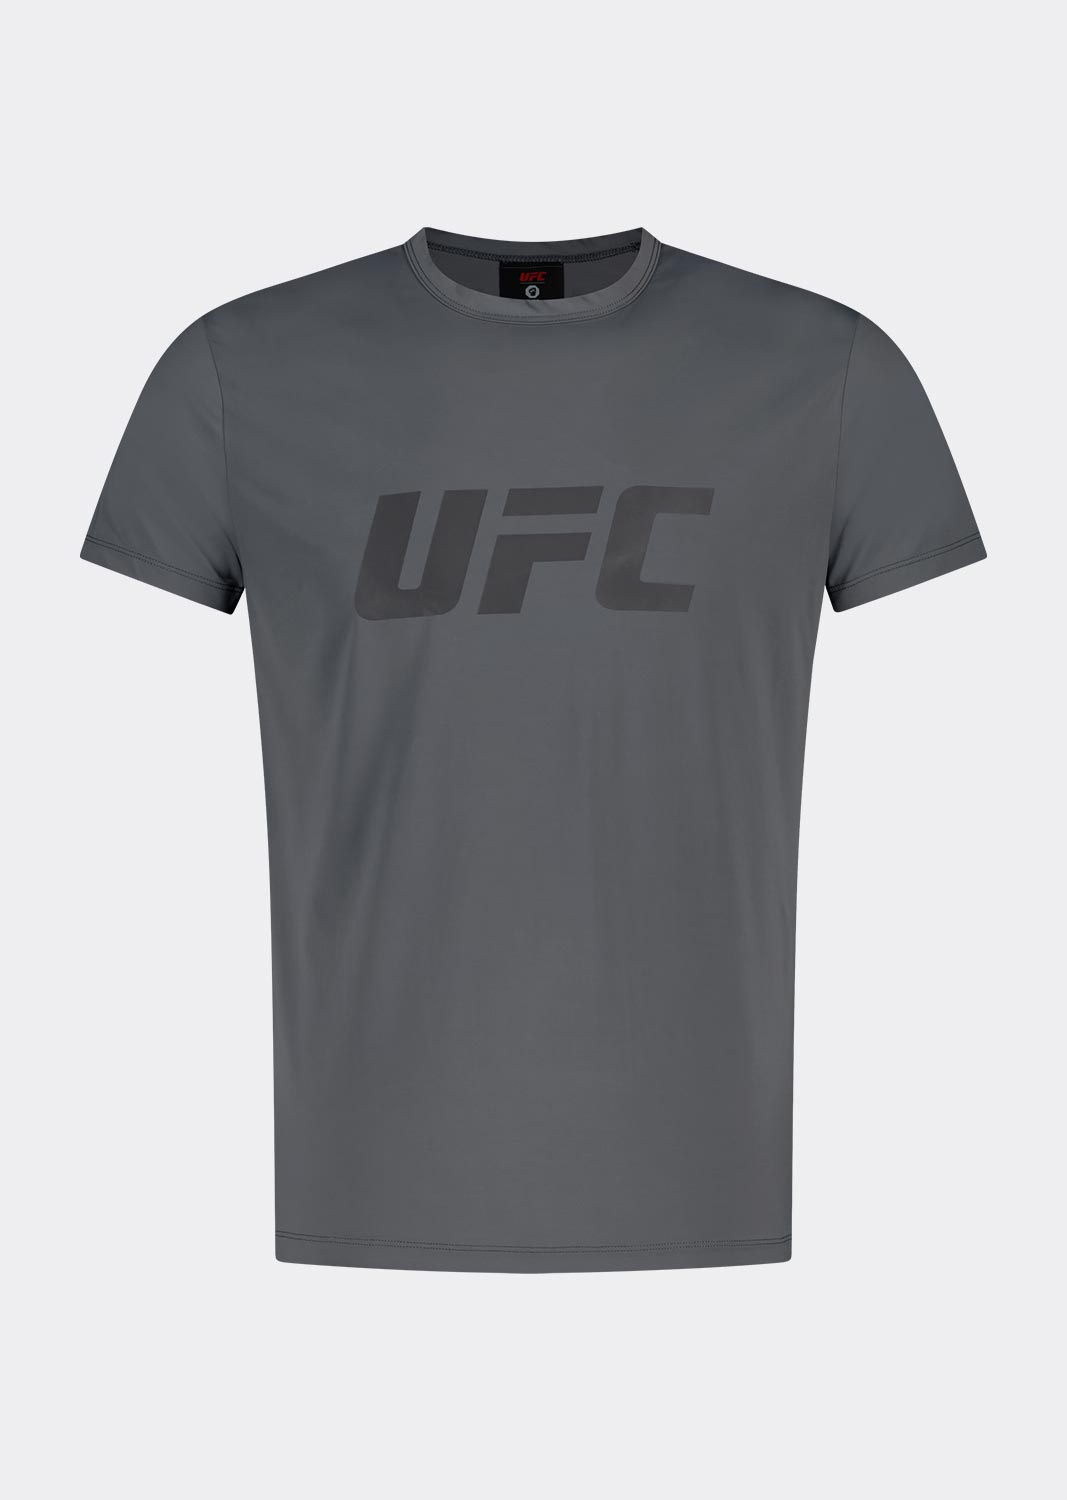 UFC 텐션 빅로고 머슬핏 반팔 티셔츠 얼티밋그레이 U4SSV2106UG